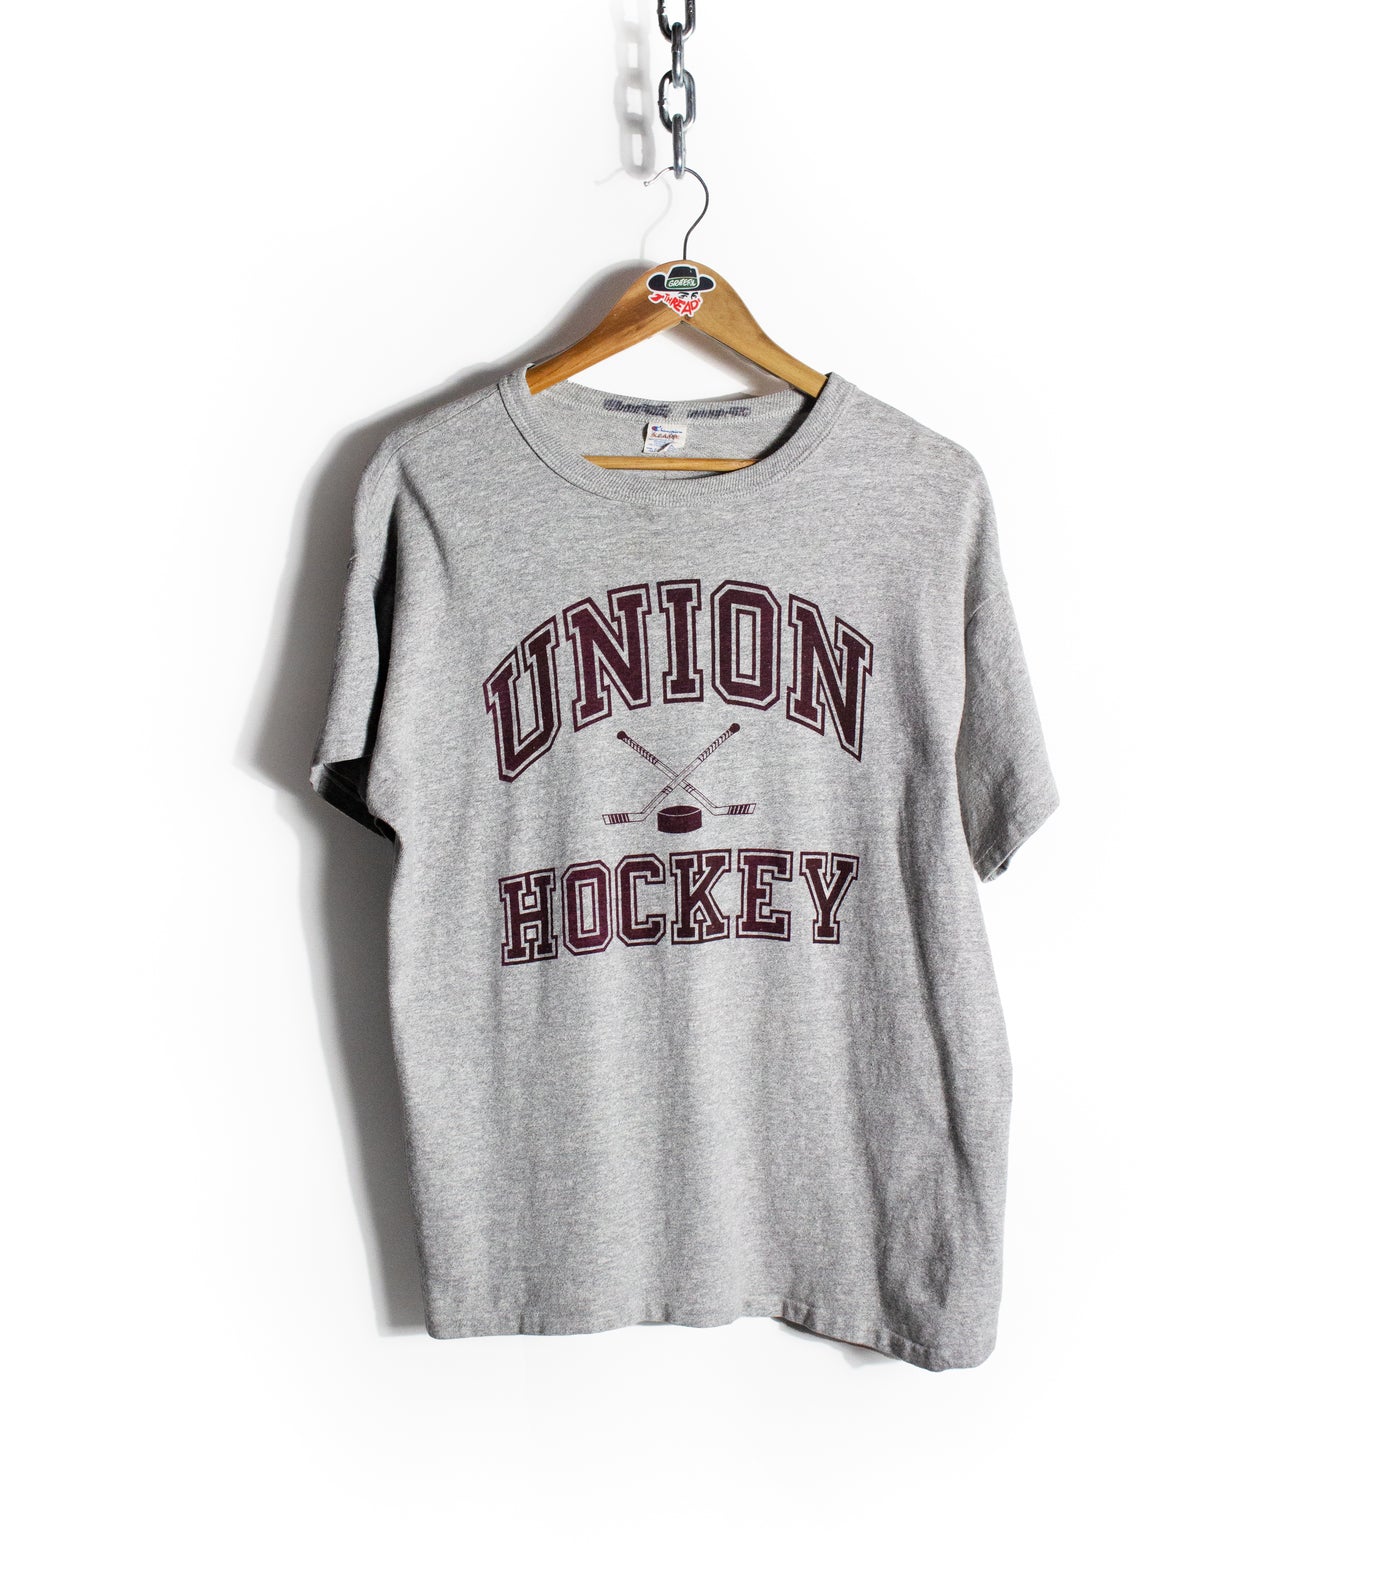 Vintage 80s Union Hockey Champion T-Shirt